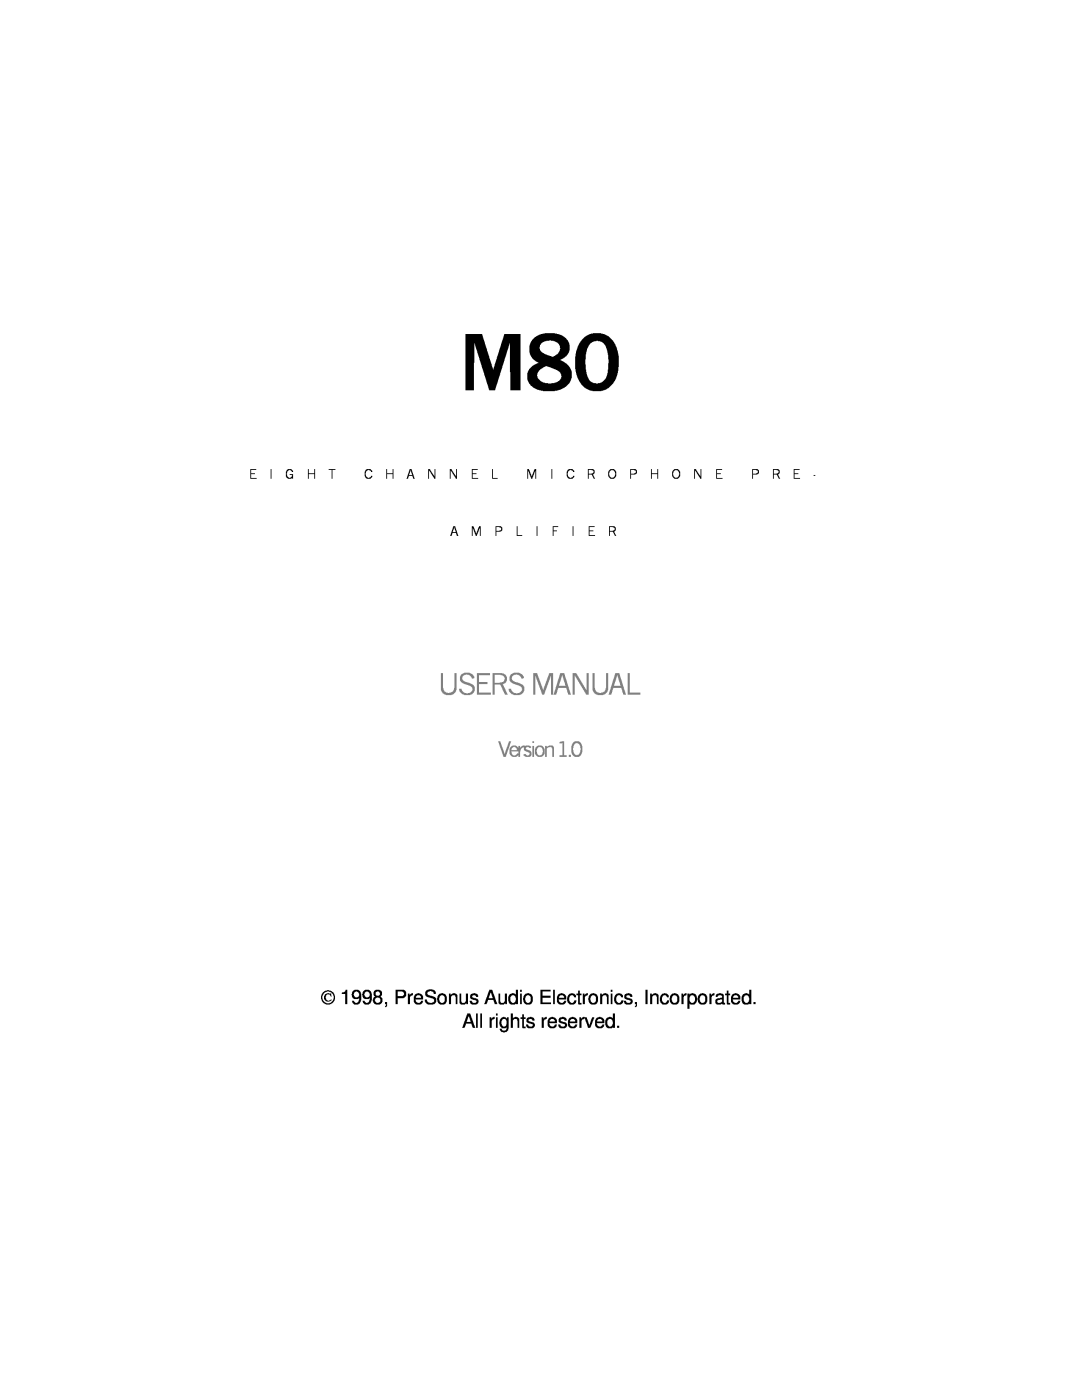 Presonus Audio electronic M80 manual Version1.0 